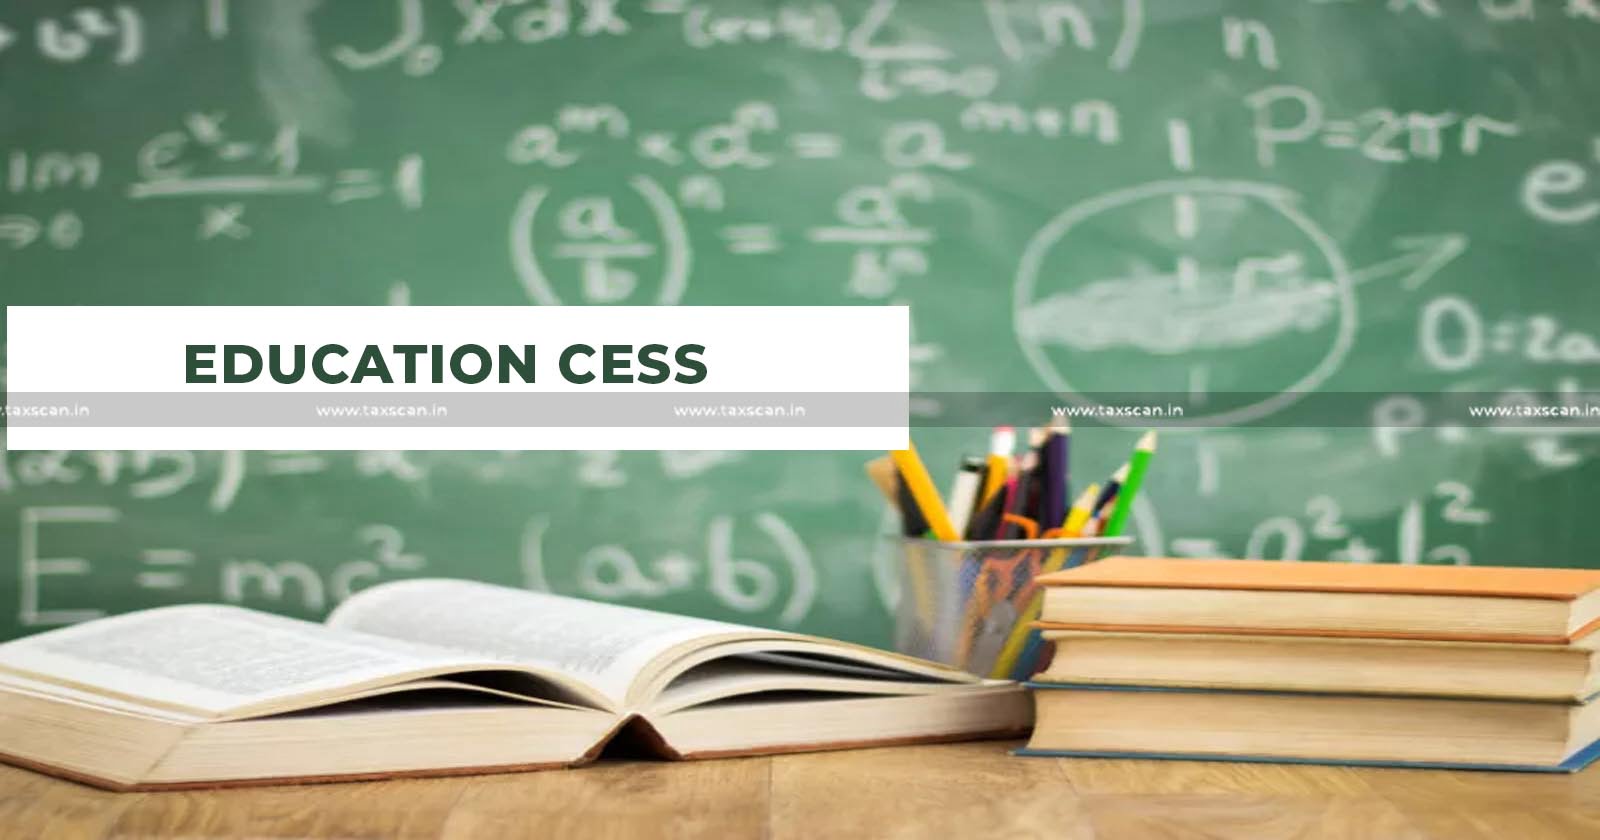 CESTAT - CESTAT Chandigarh - Education Cess refund - Education Cess - Cess refund - taxscan